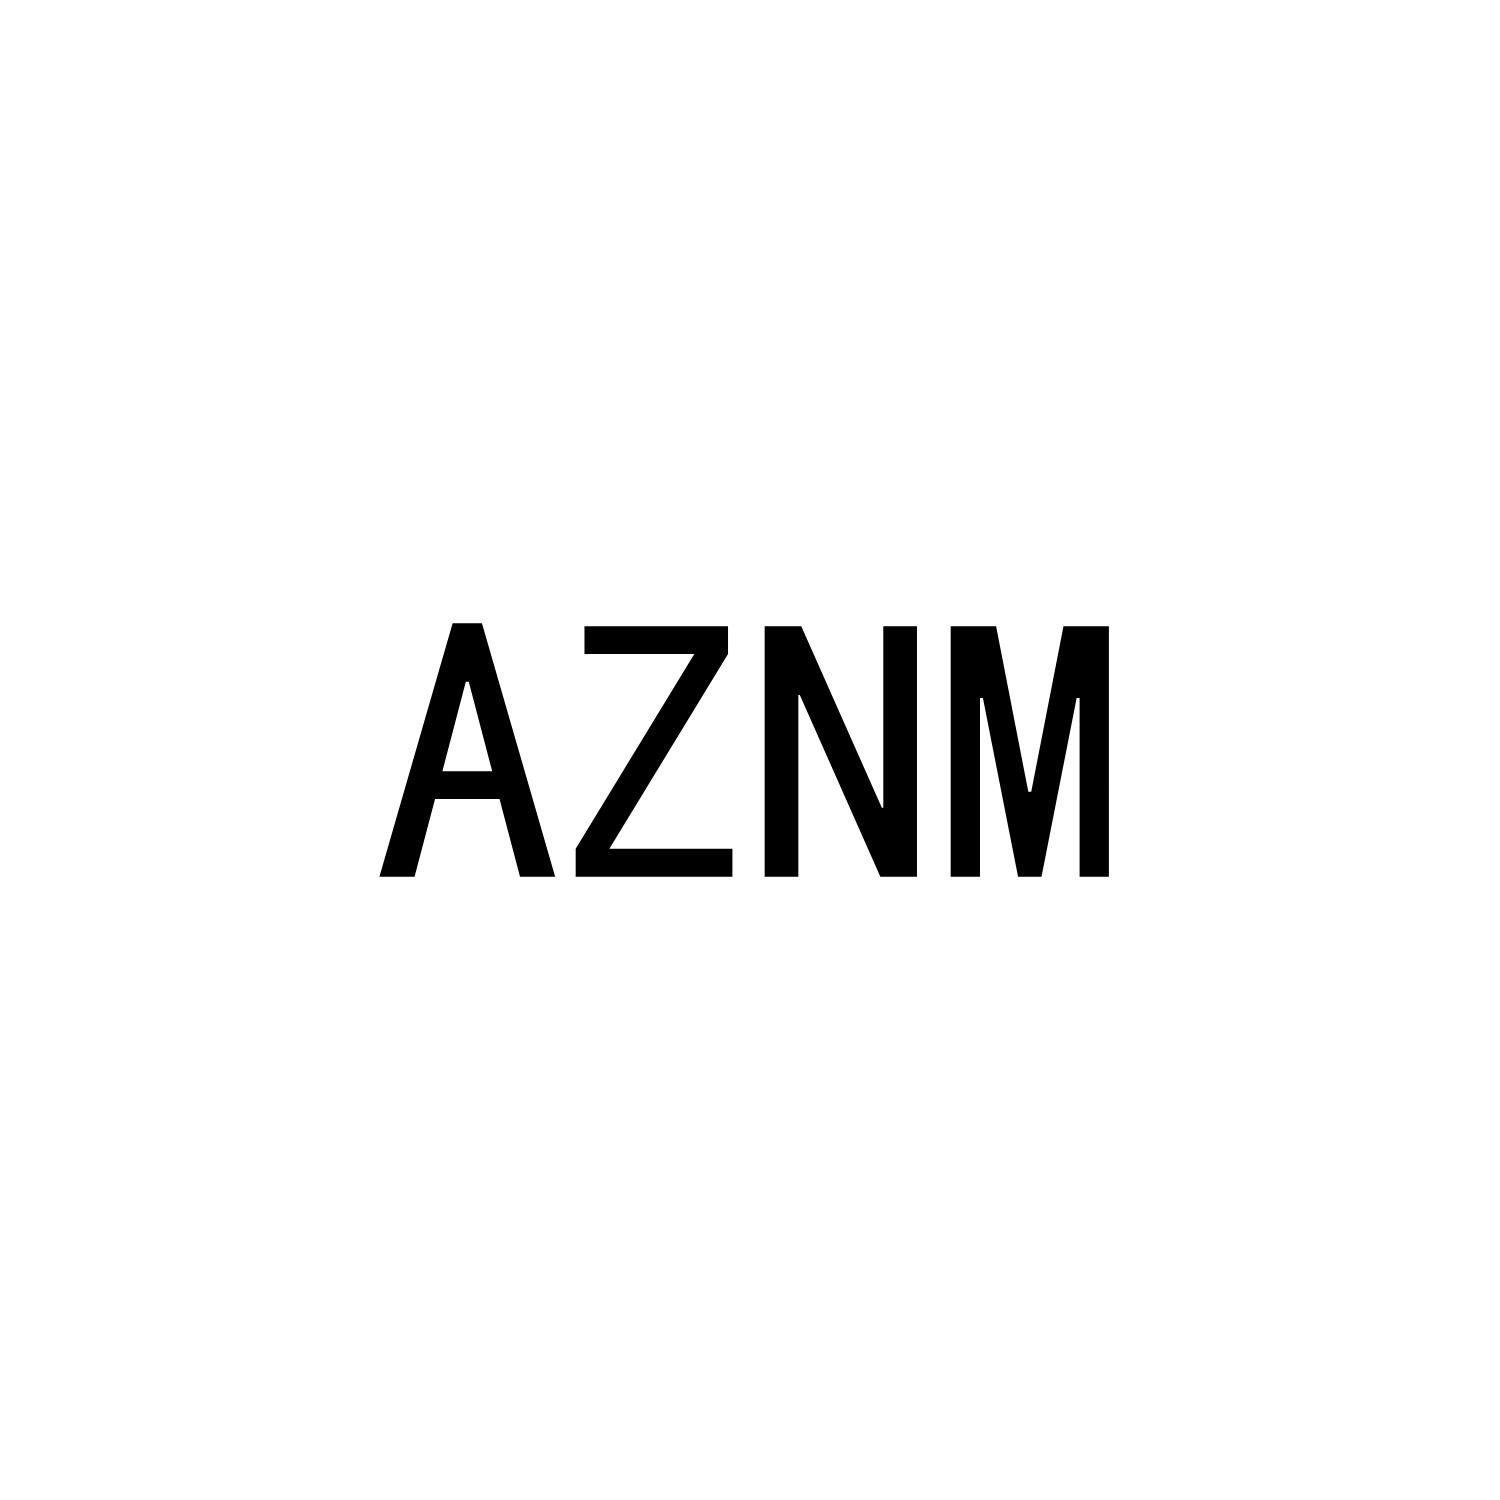 AZNM